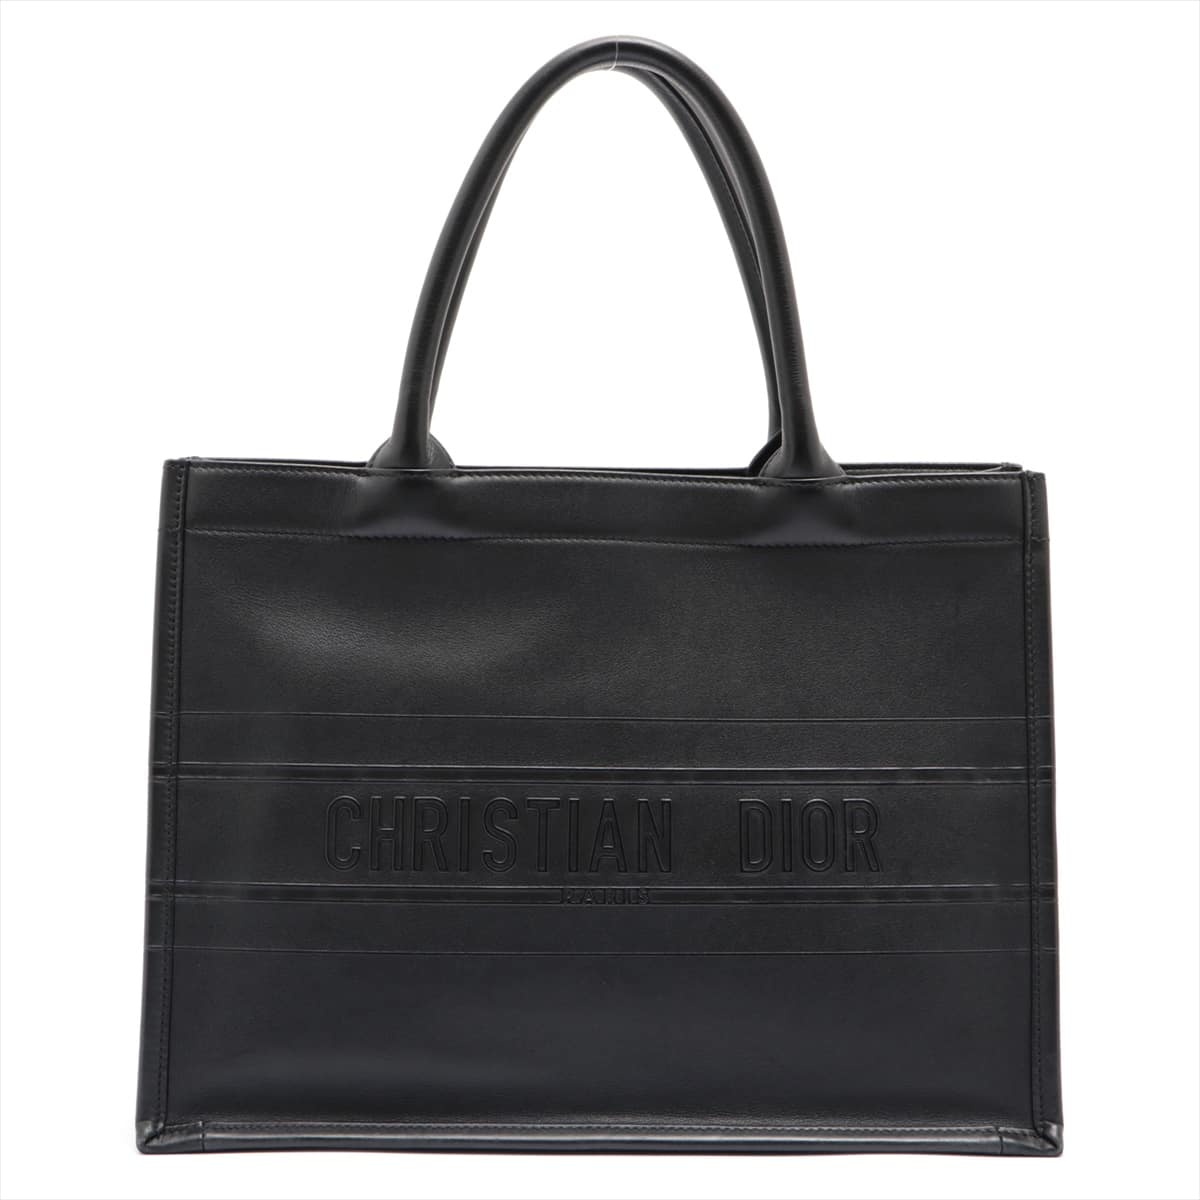 Christian Dior Book Tote Leather Tote bag Black